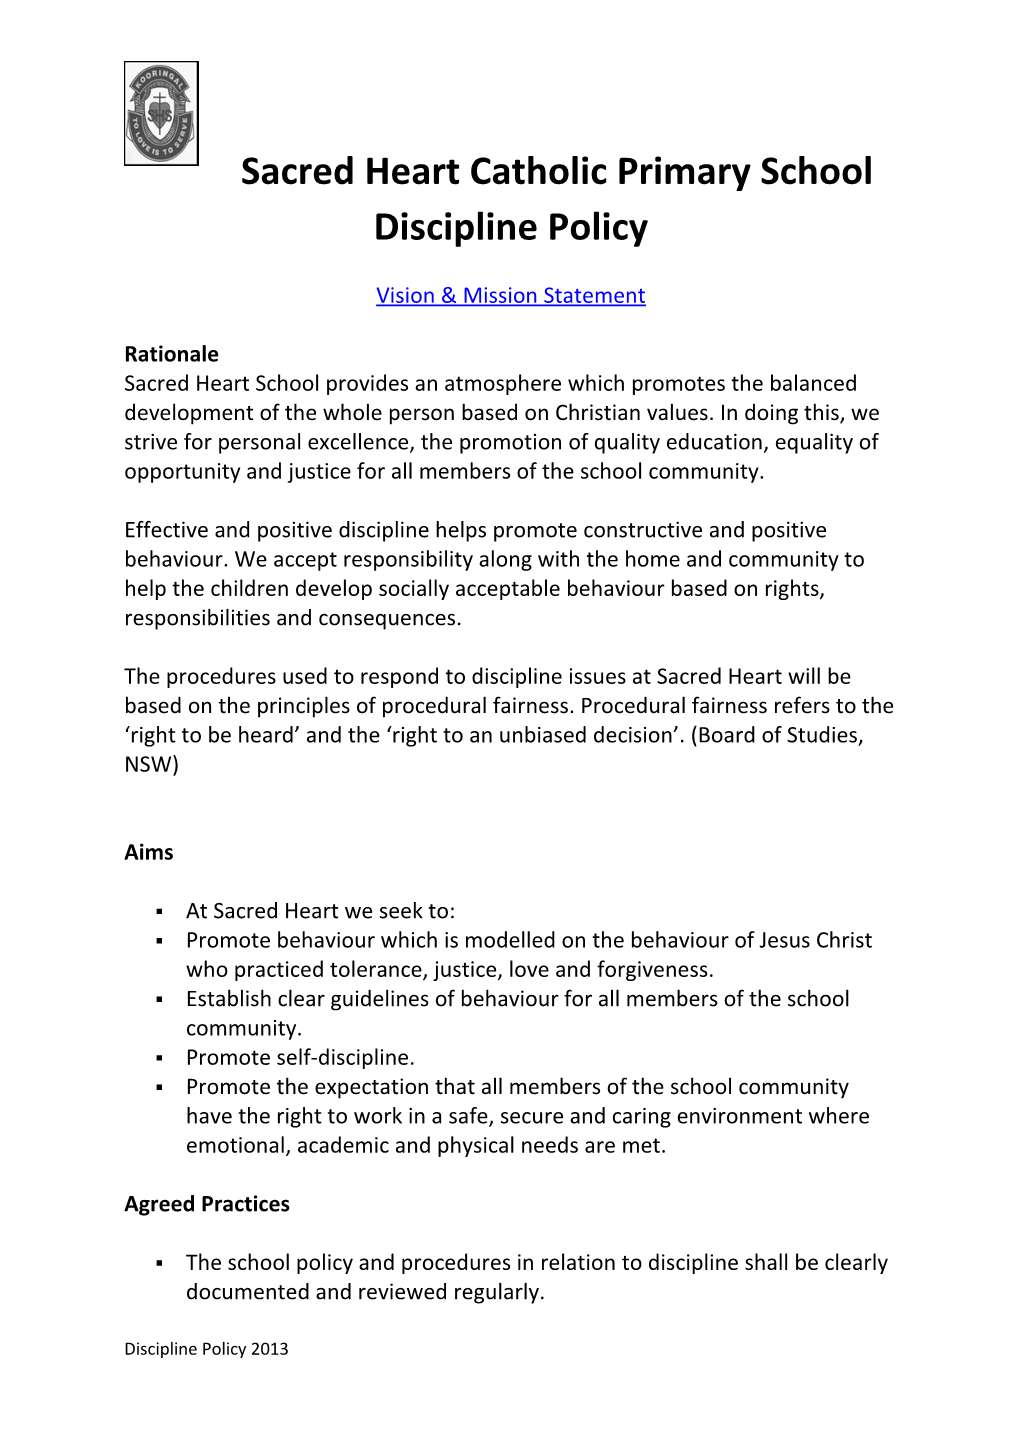 Discipline Policy